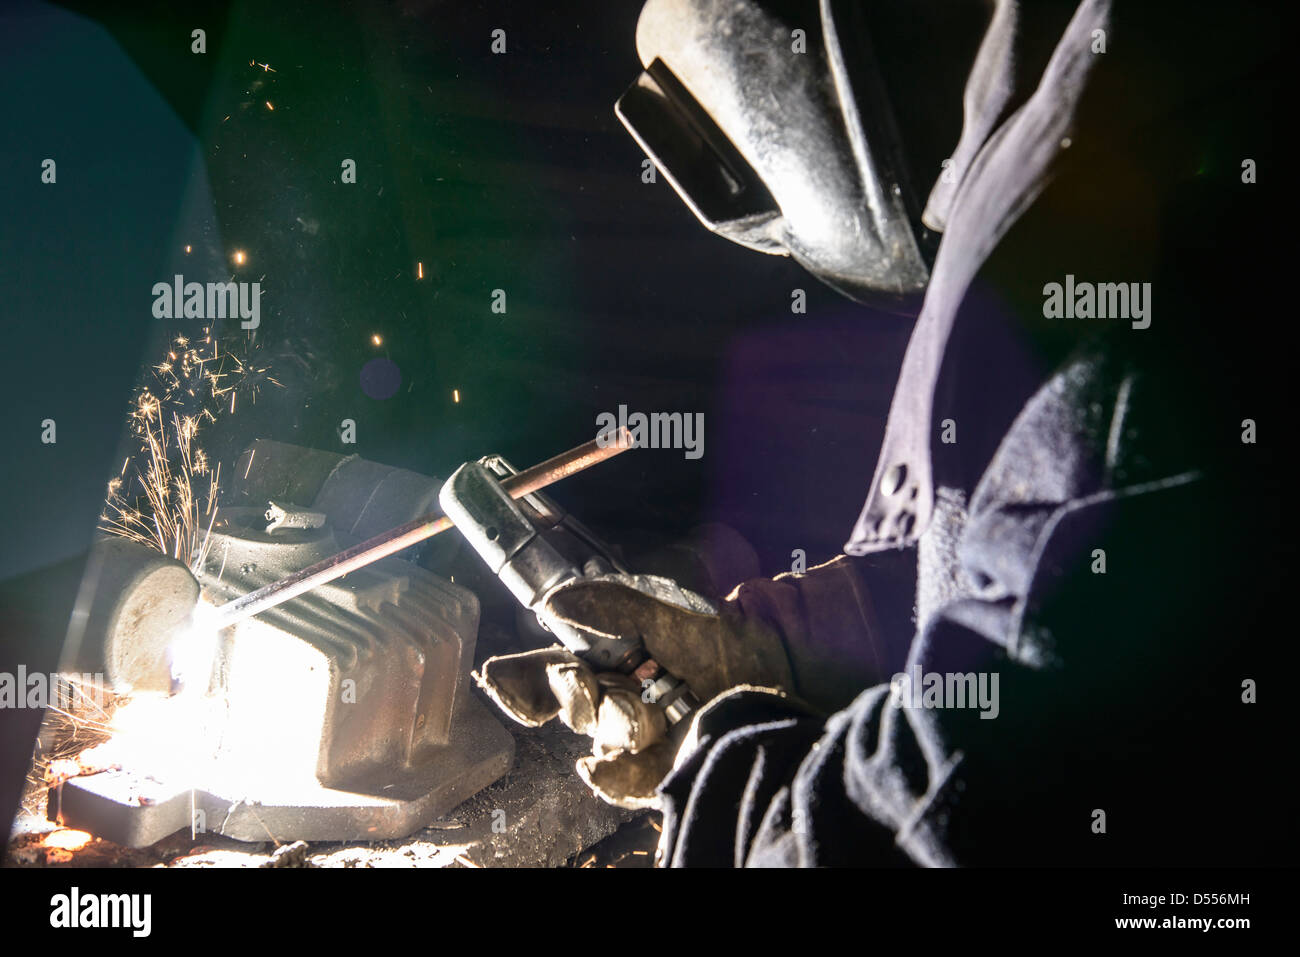 Worker welding metal in foundry Stock Photo